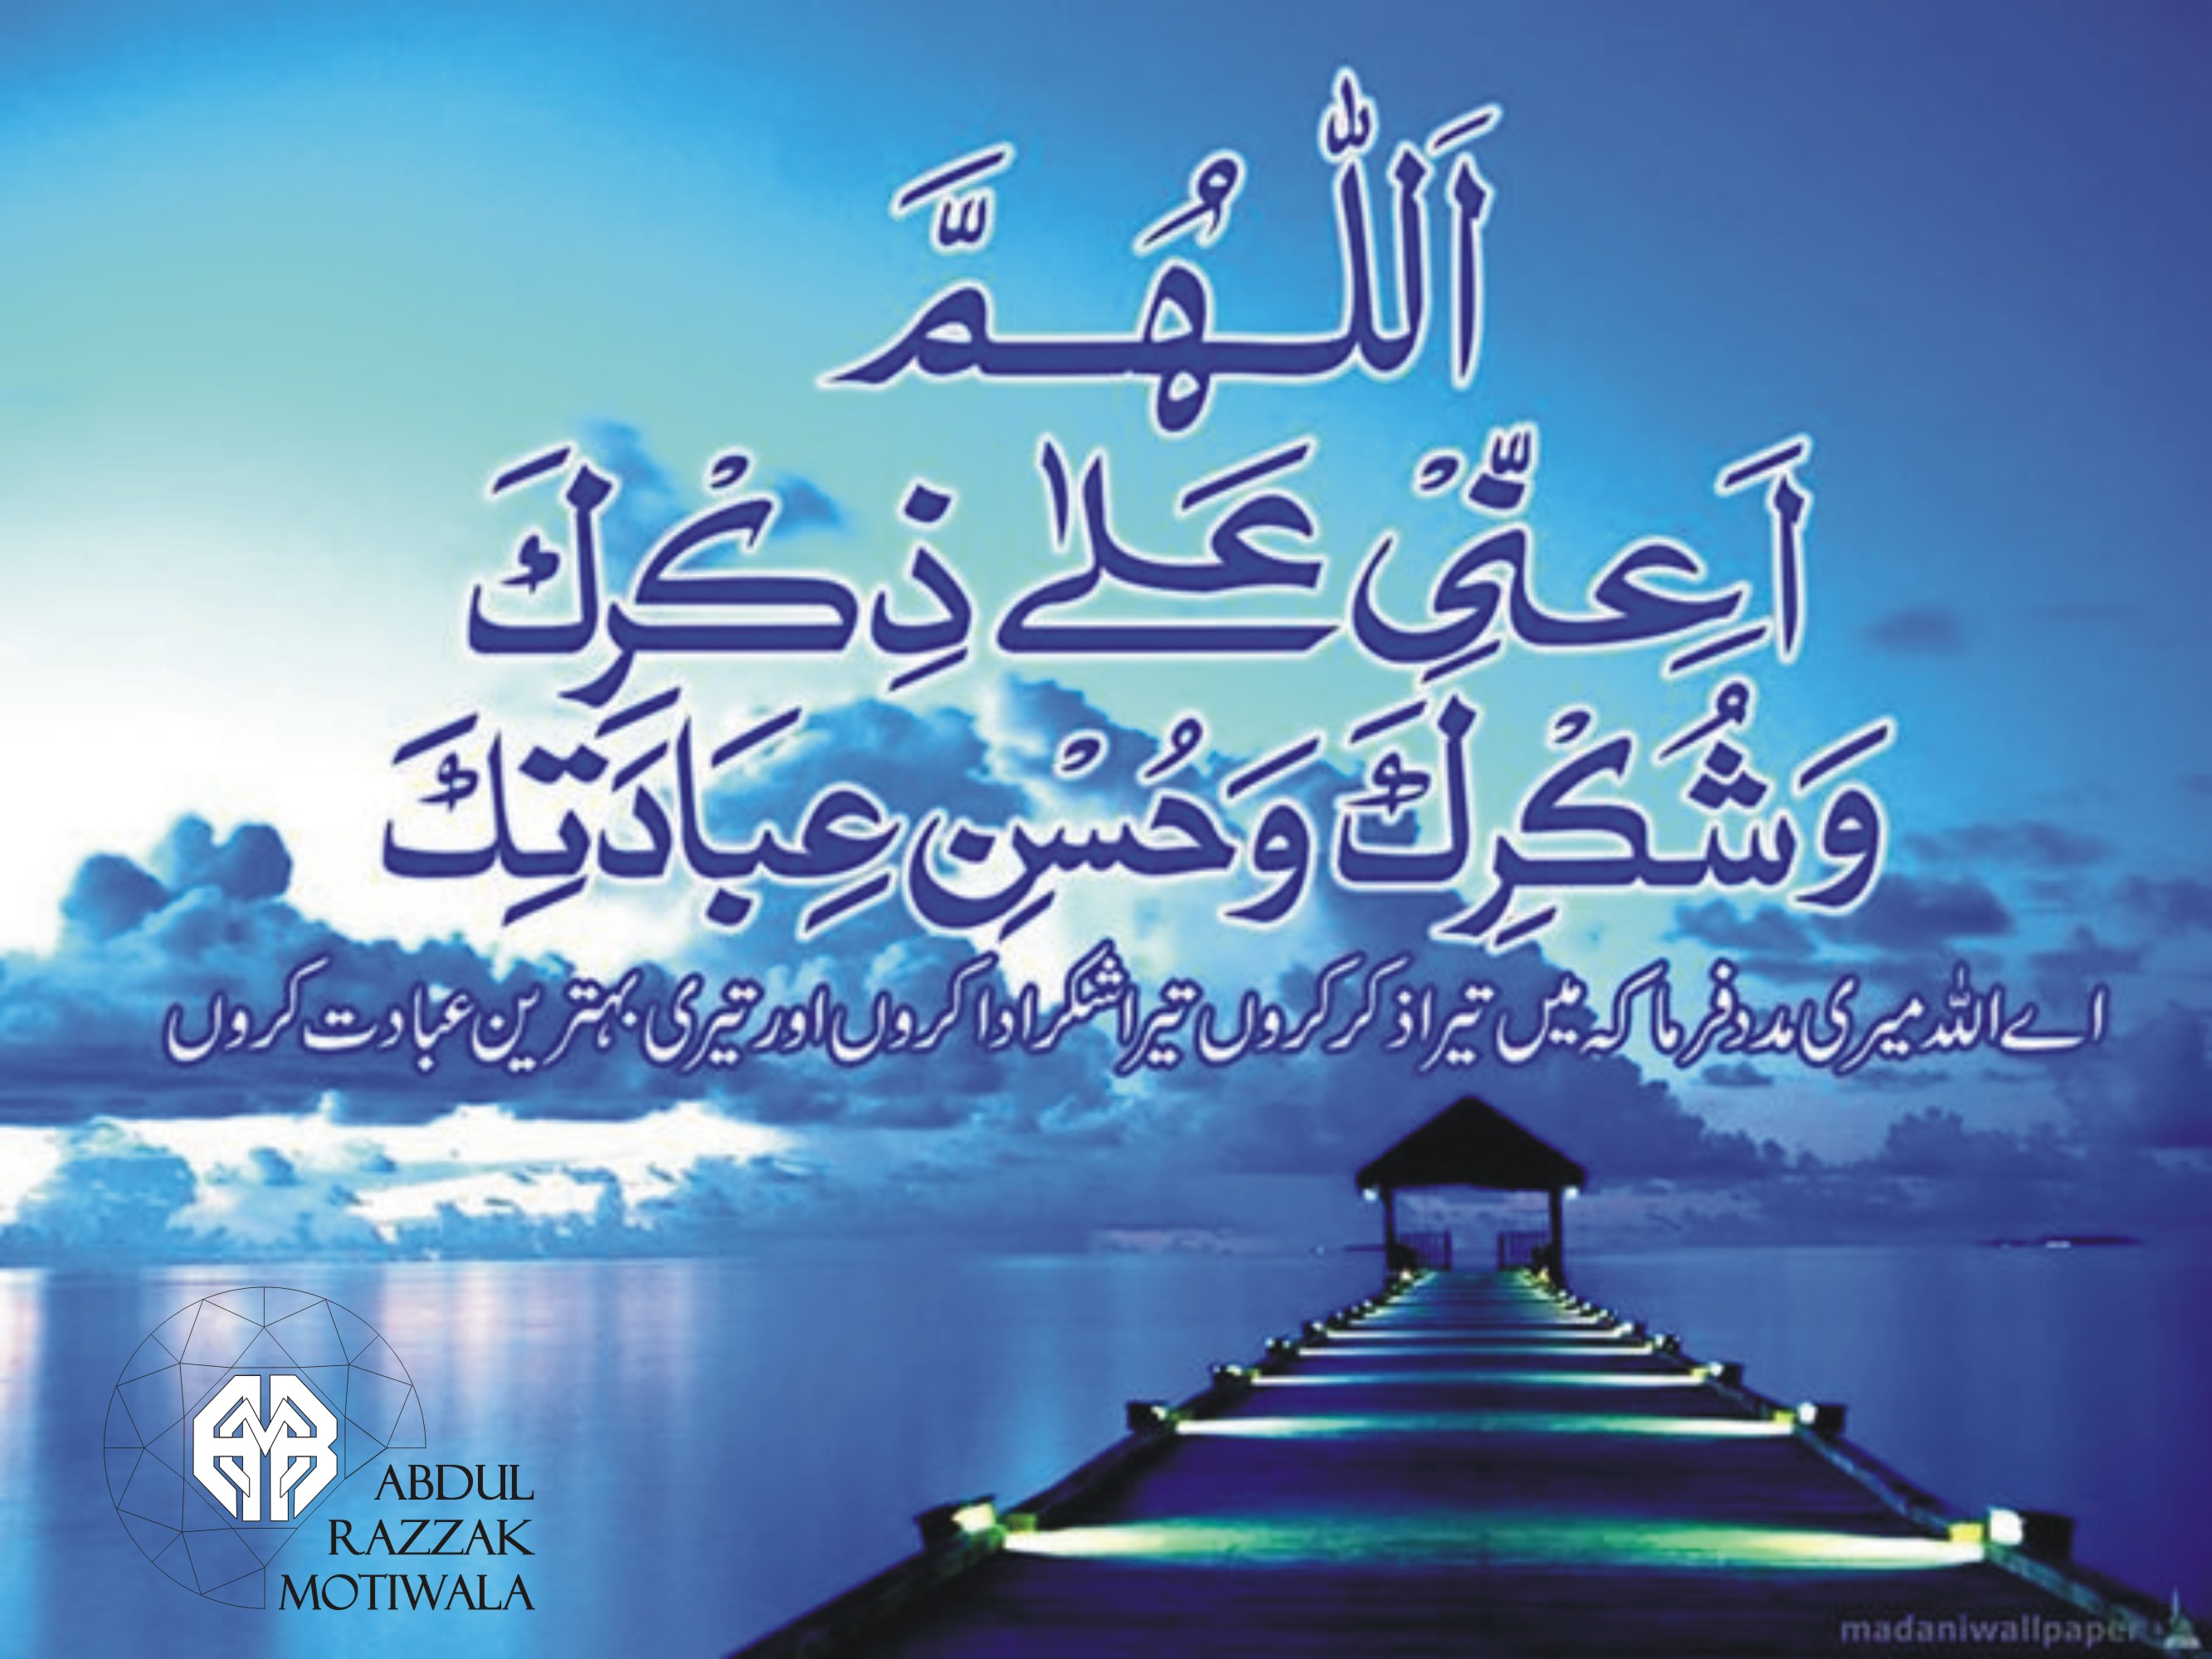 Happy Jumma Mubarak With Dua Arabic - HD Wallpaper 